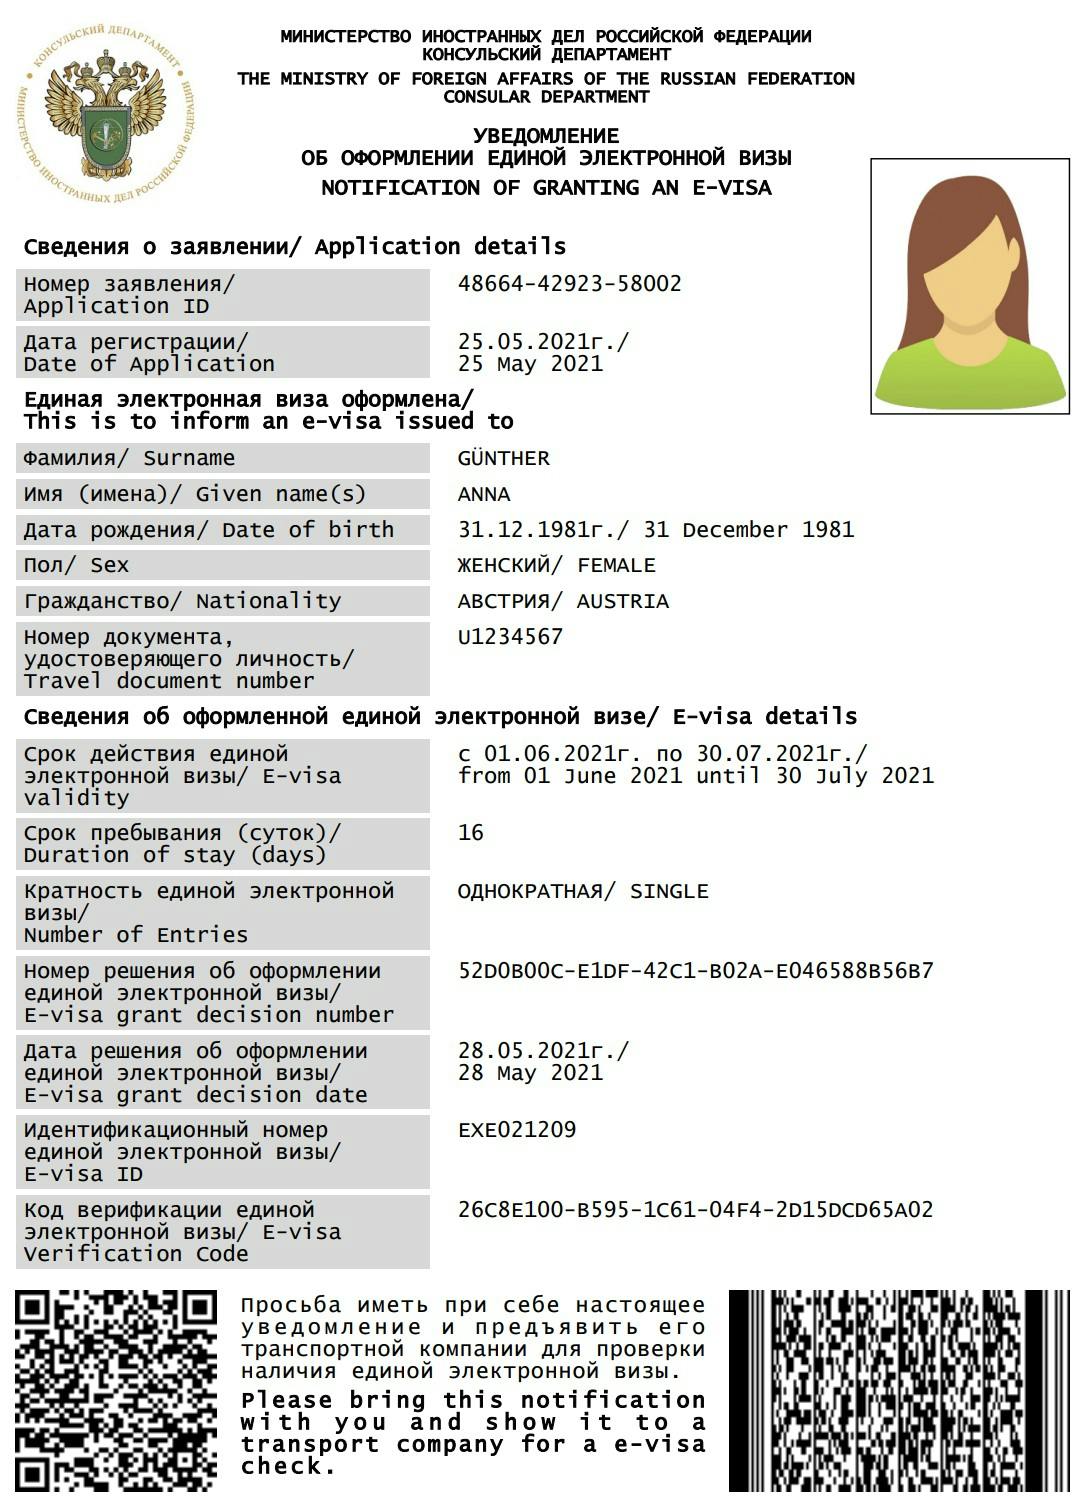 Russia e-visa grant notification sample image